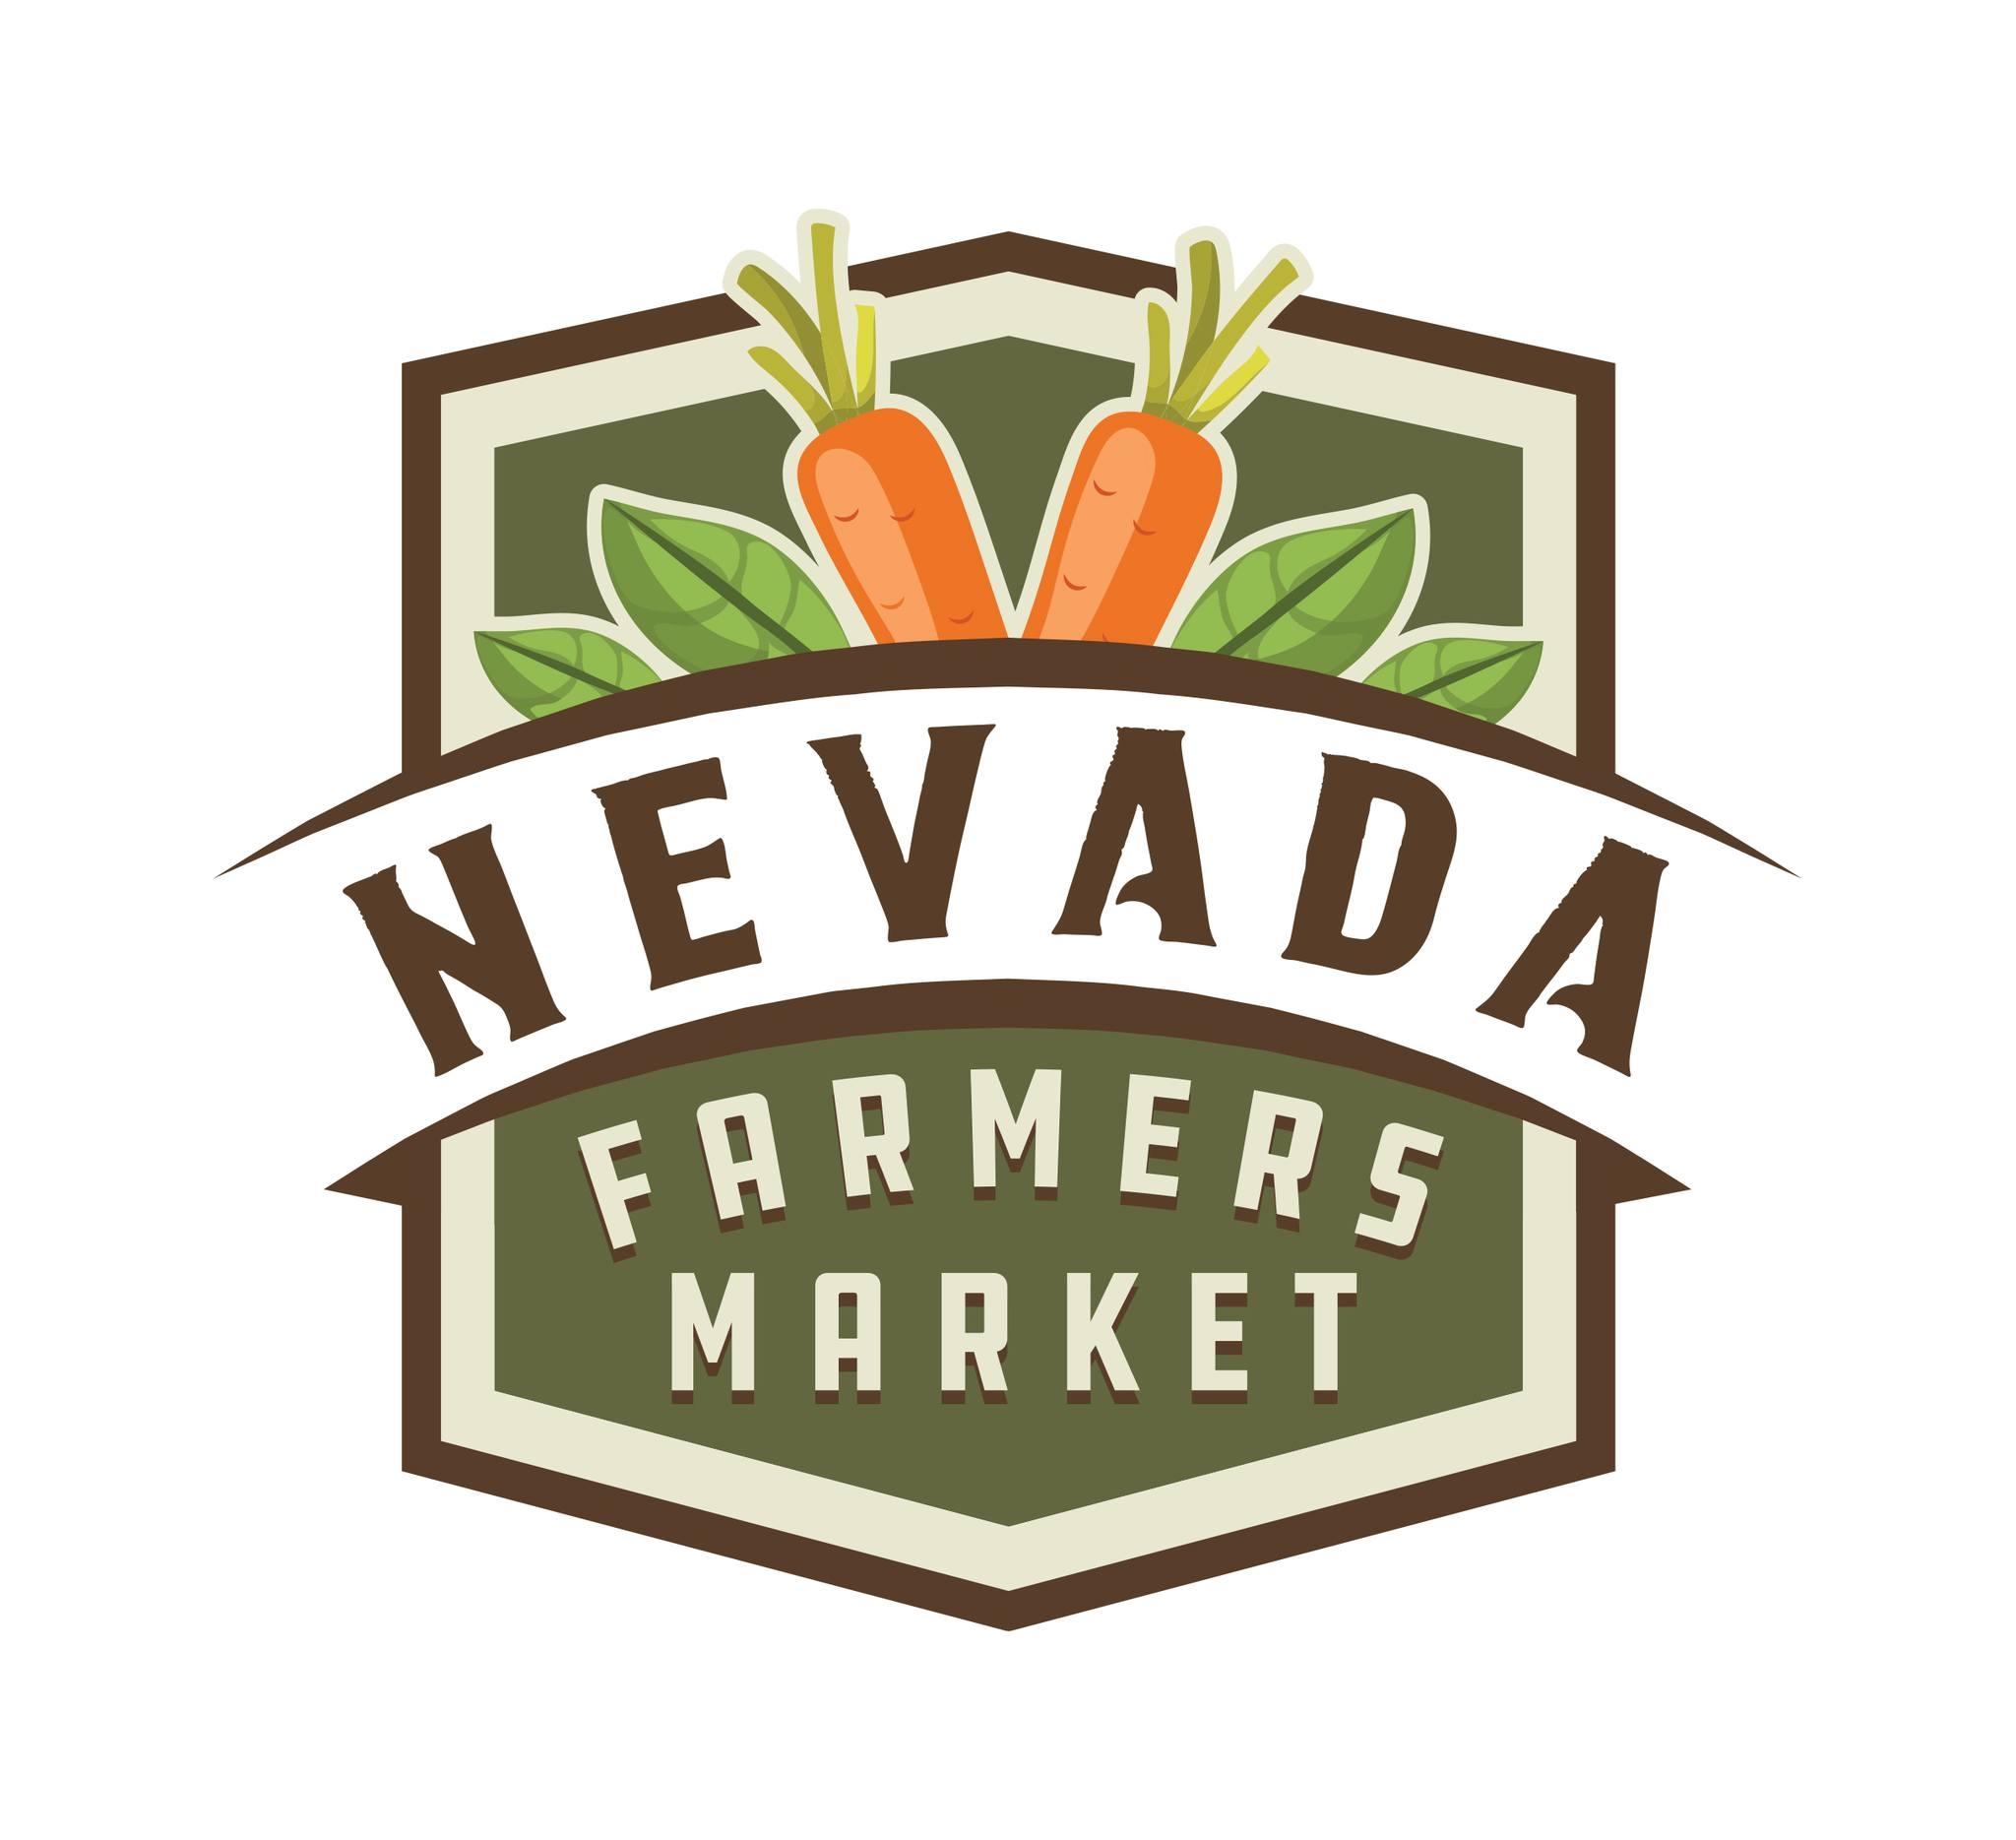 Nevada Farmers Market